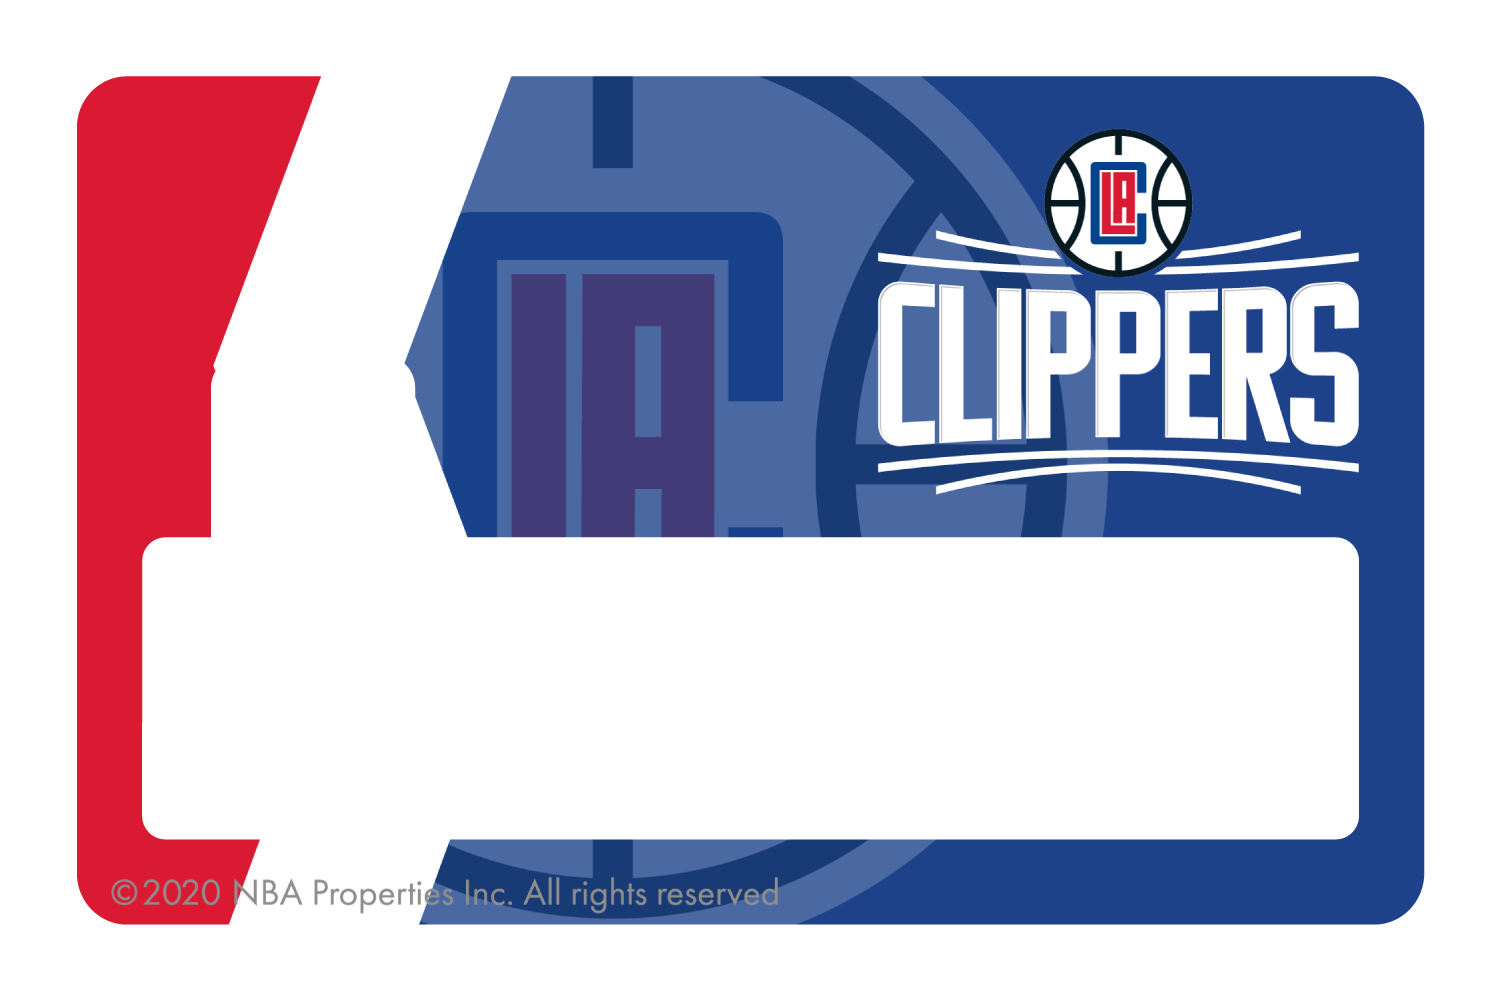 LA Clippers: Crossover